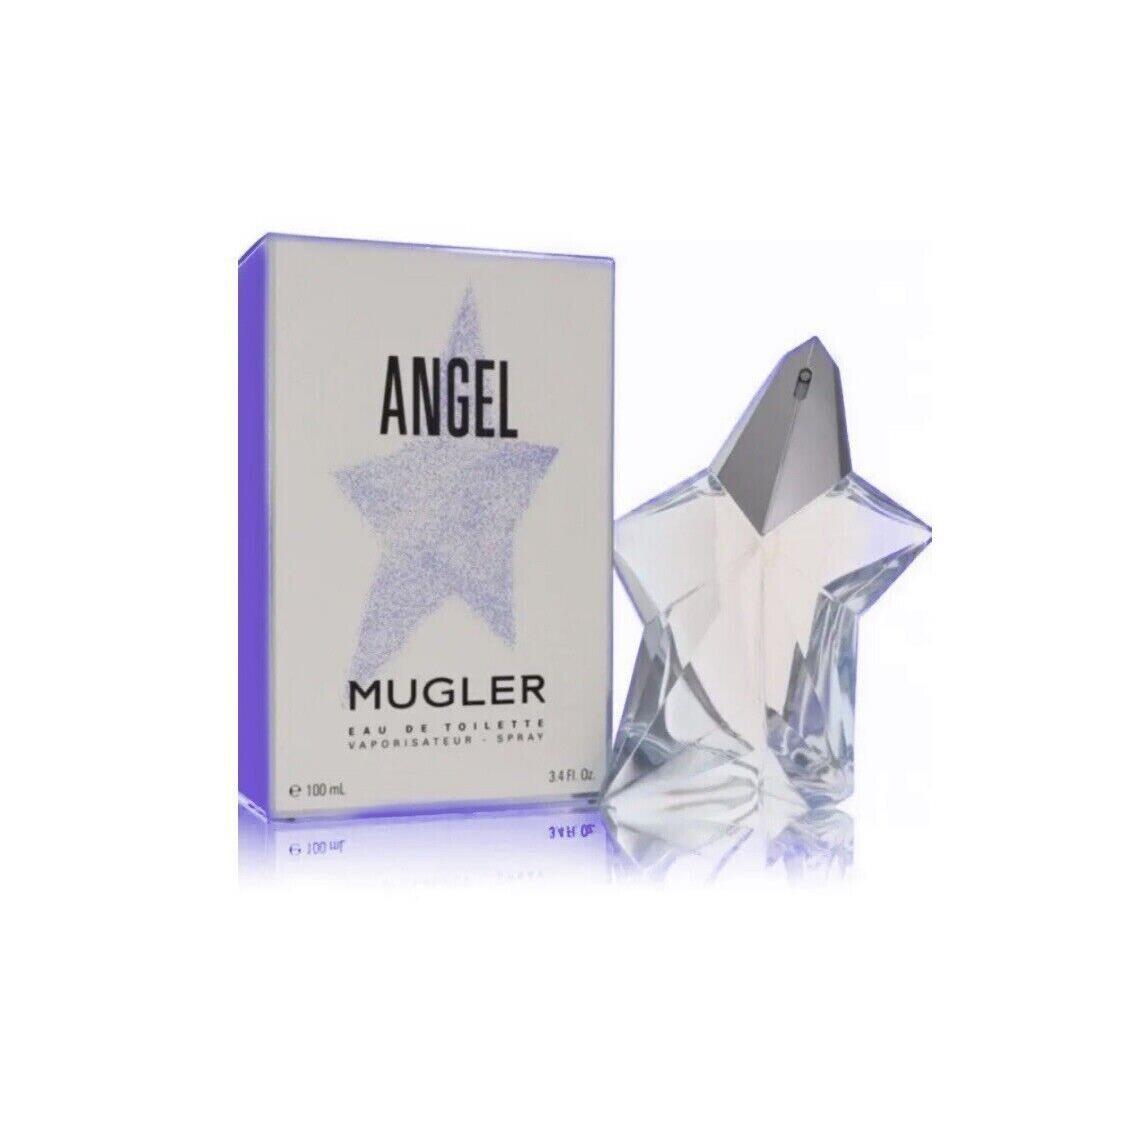 Angel by Thierry Mugler For Women 3.4 oz Eau de Toilette Spray